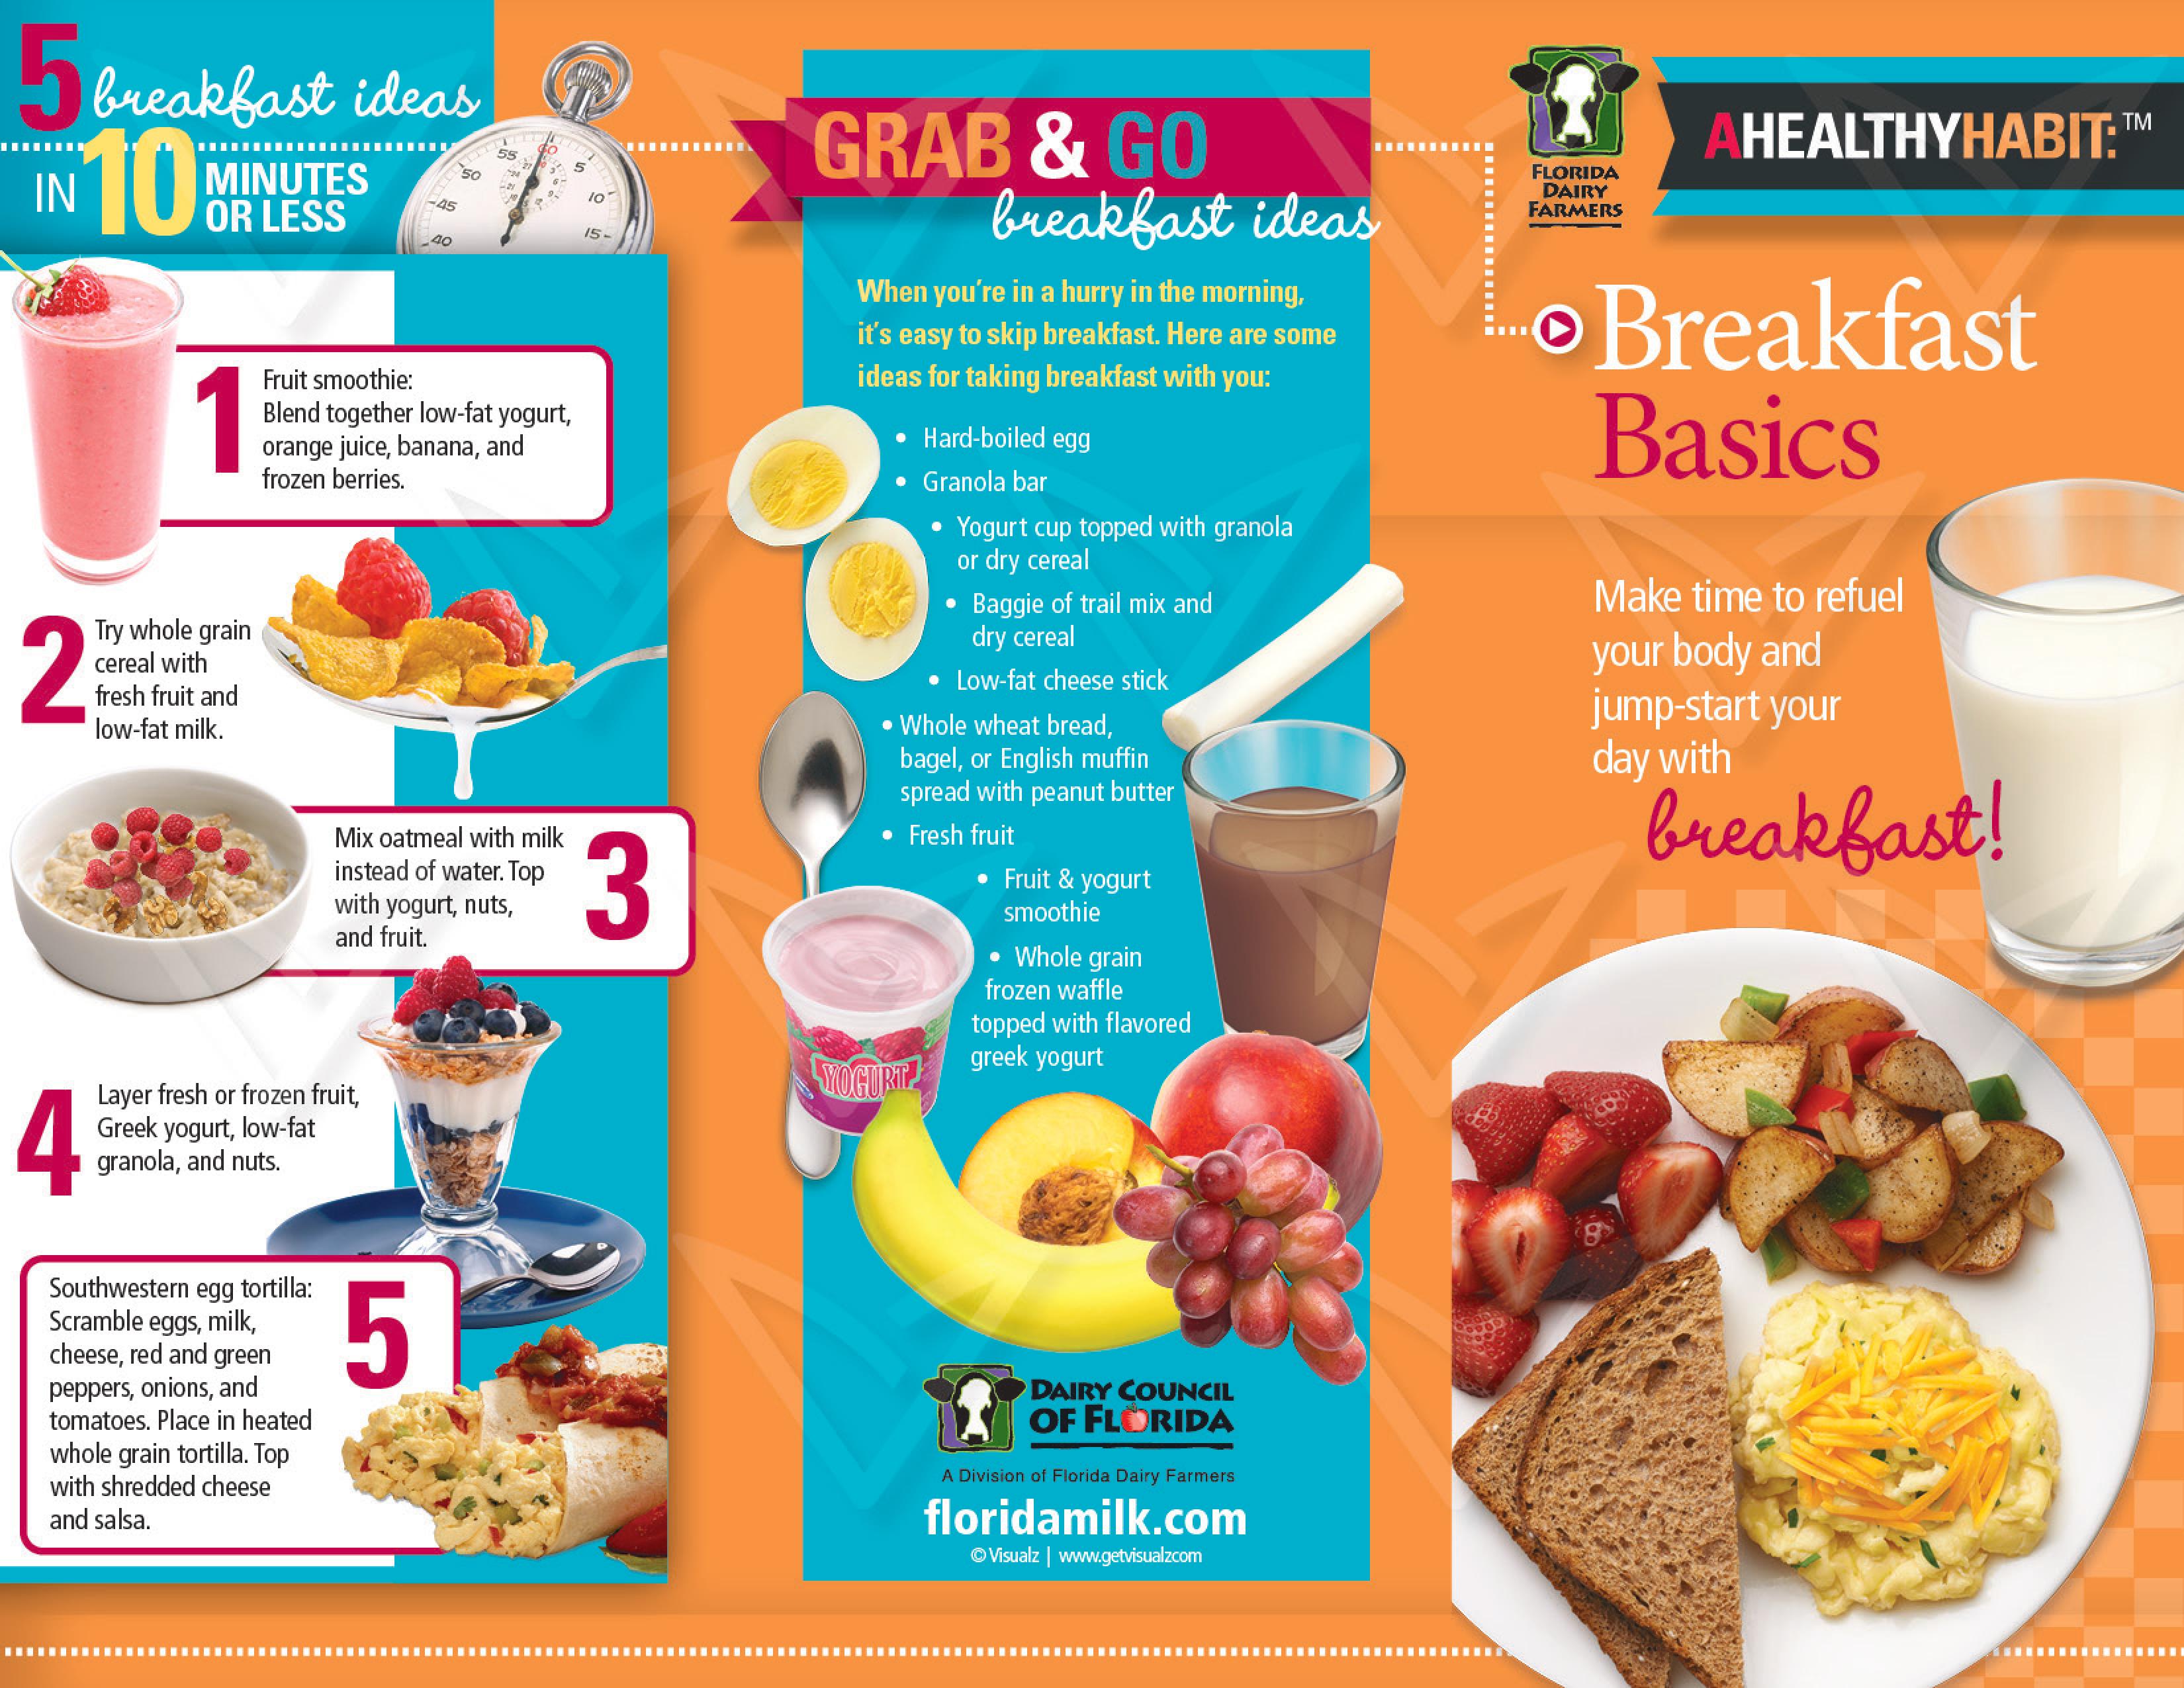 Grab & Go Breakfast Ideas image